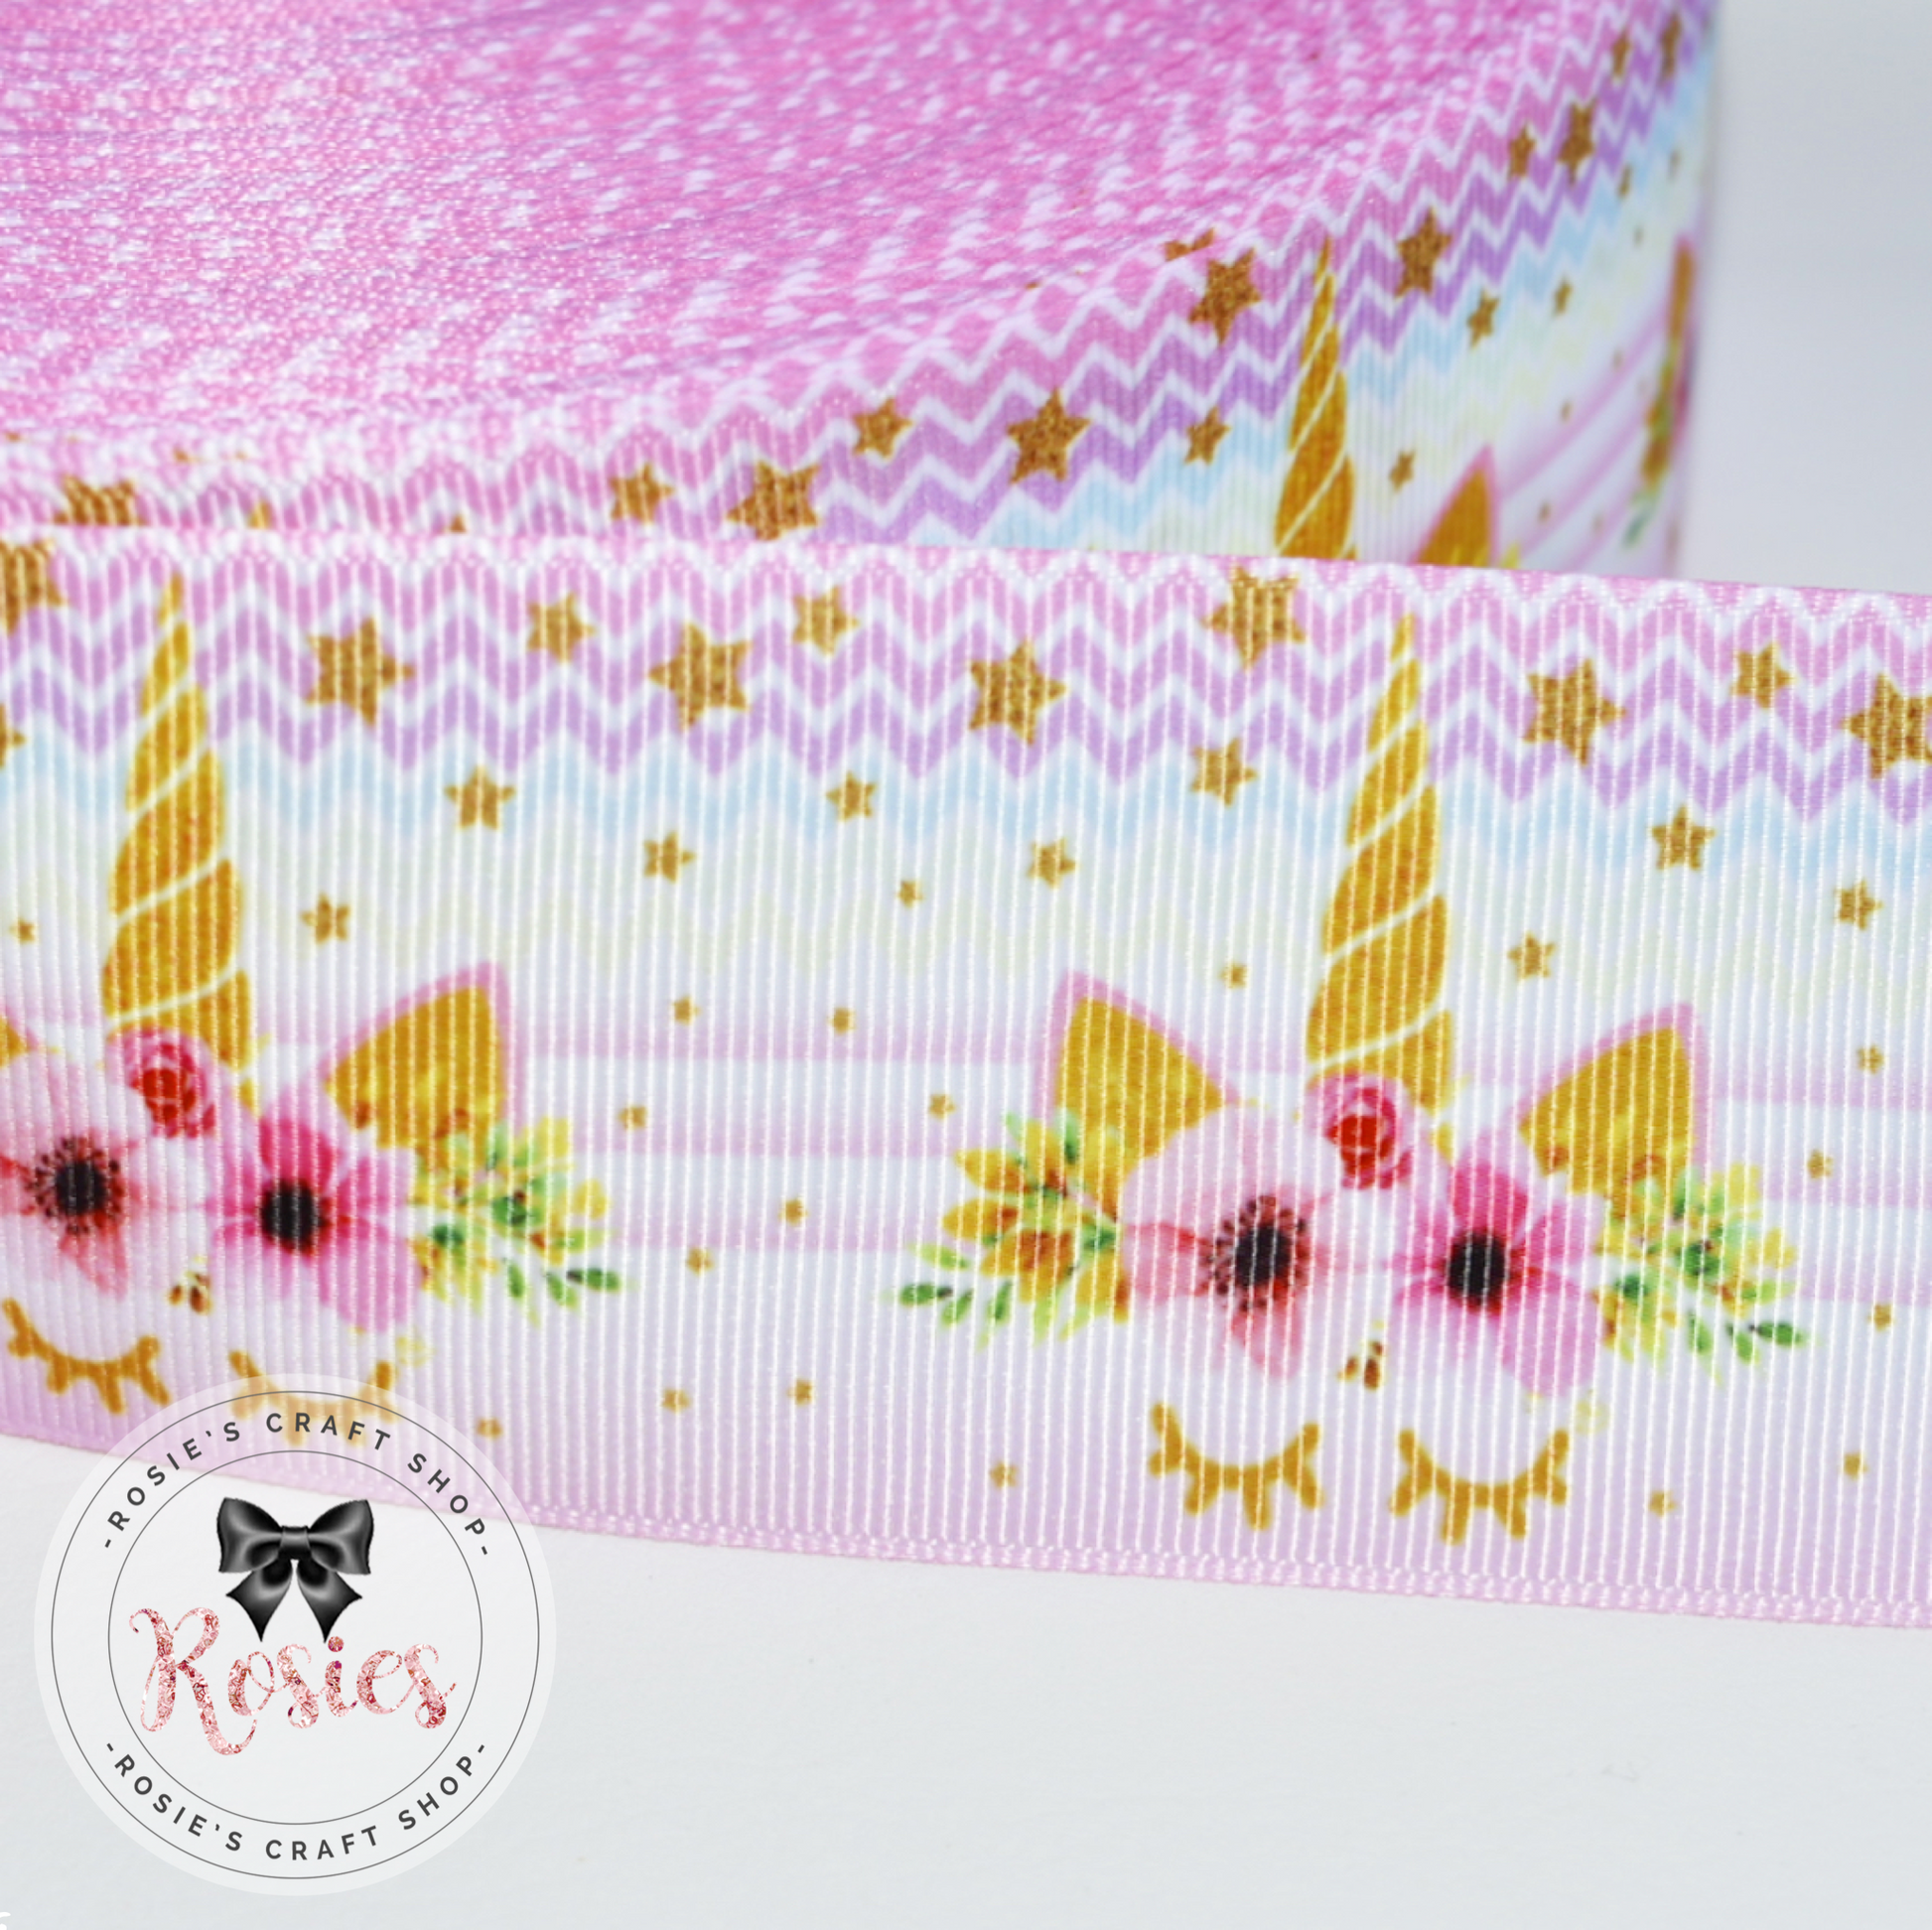 Sleepy Unicorns in Pink & Gold Printed Grosgrain Ribbon - Rosie's Craft Shop Ltd